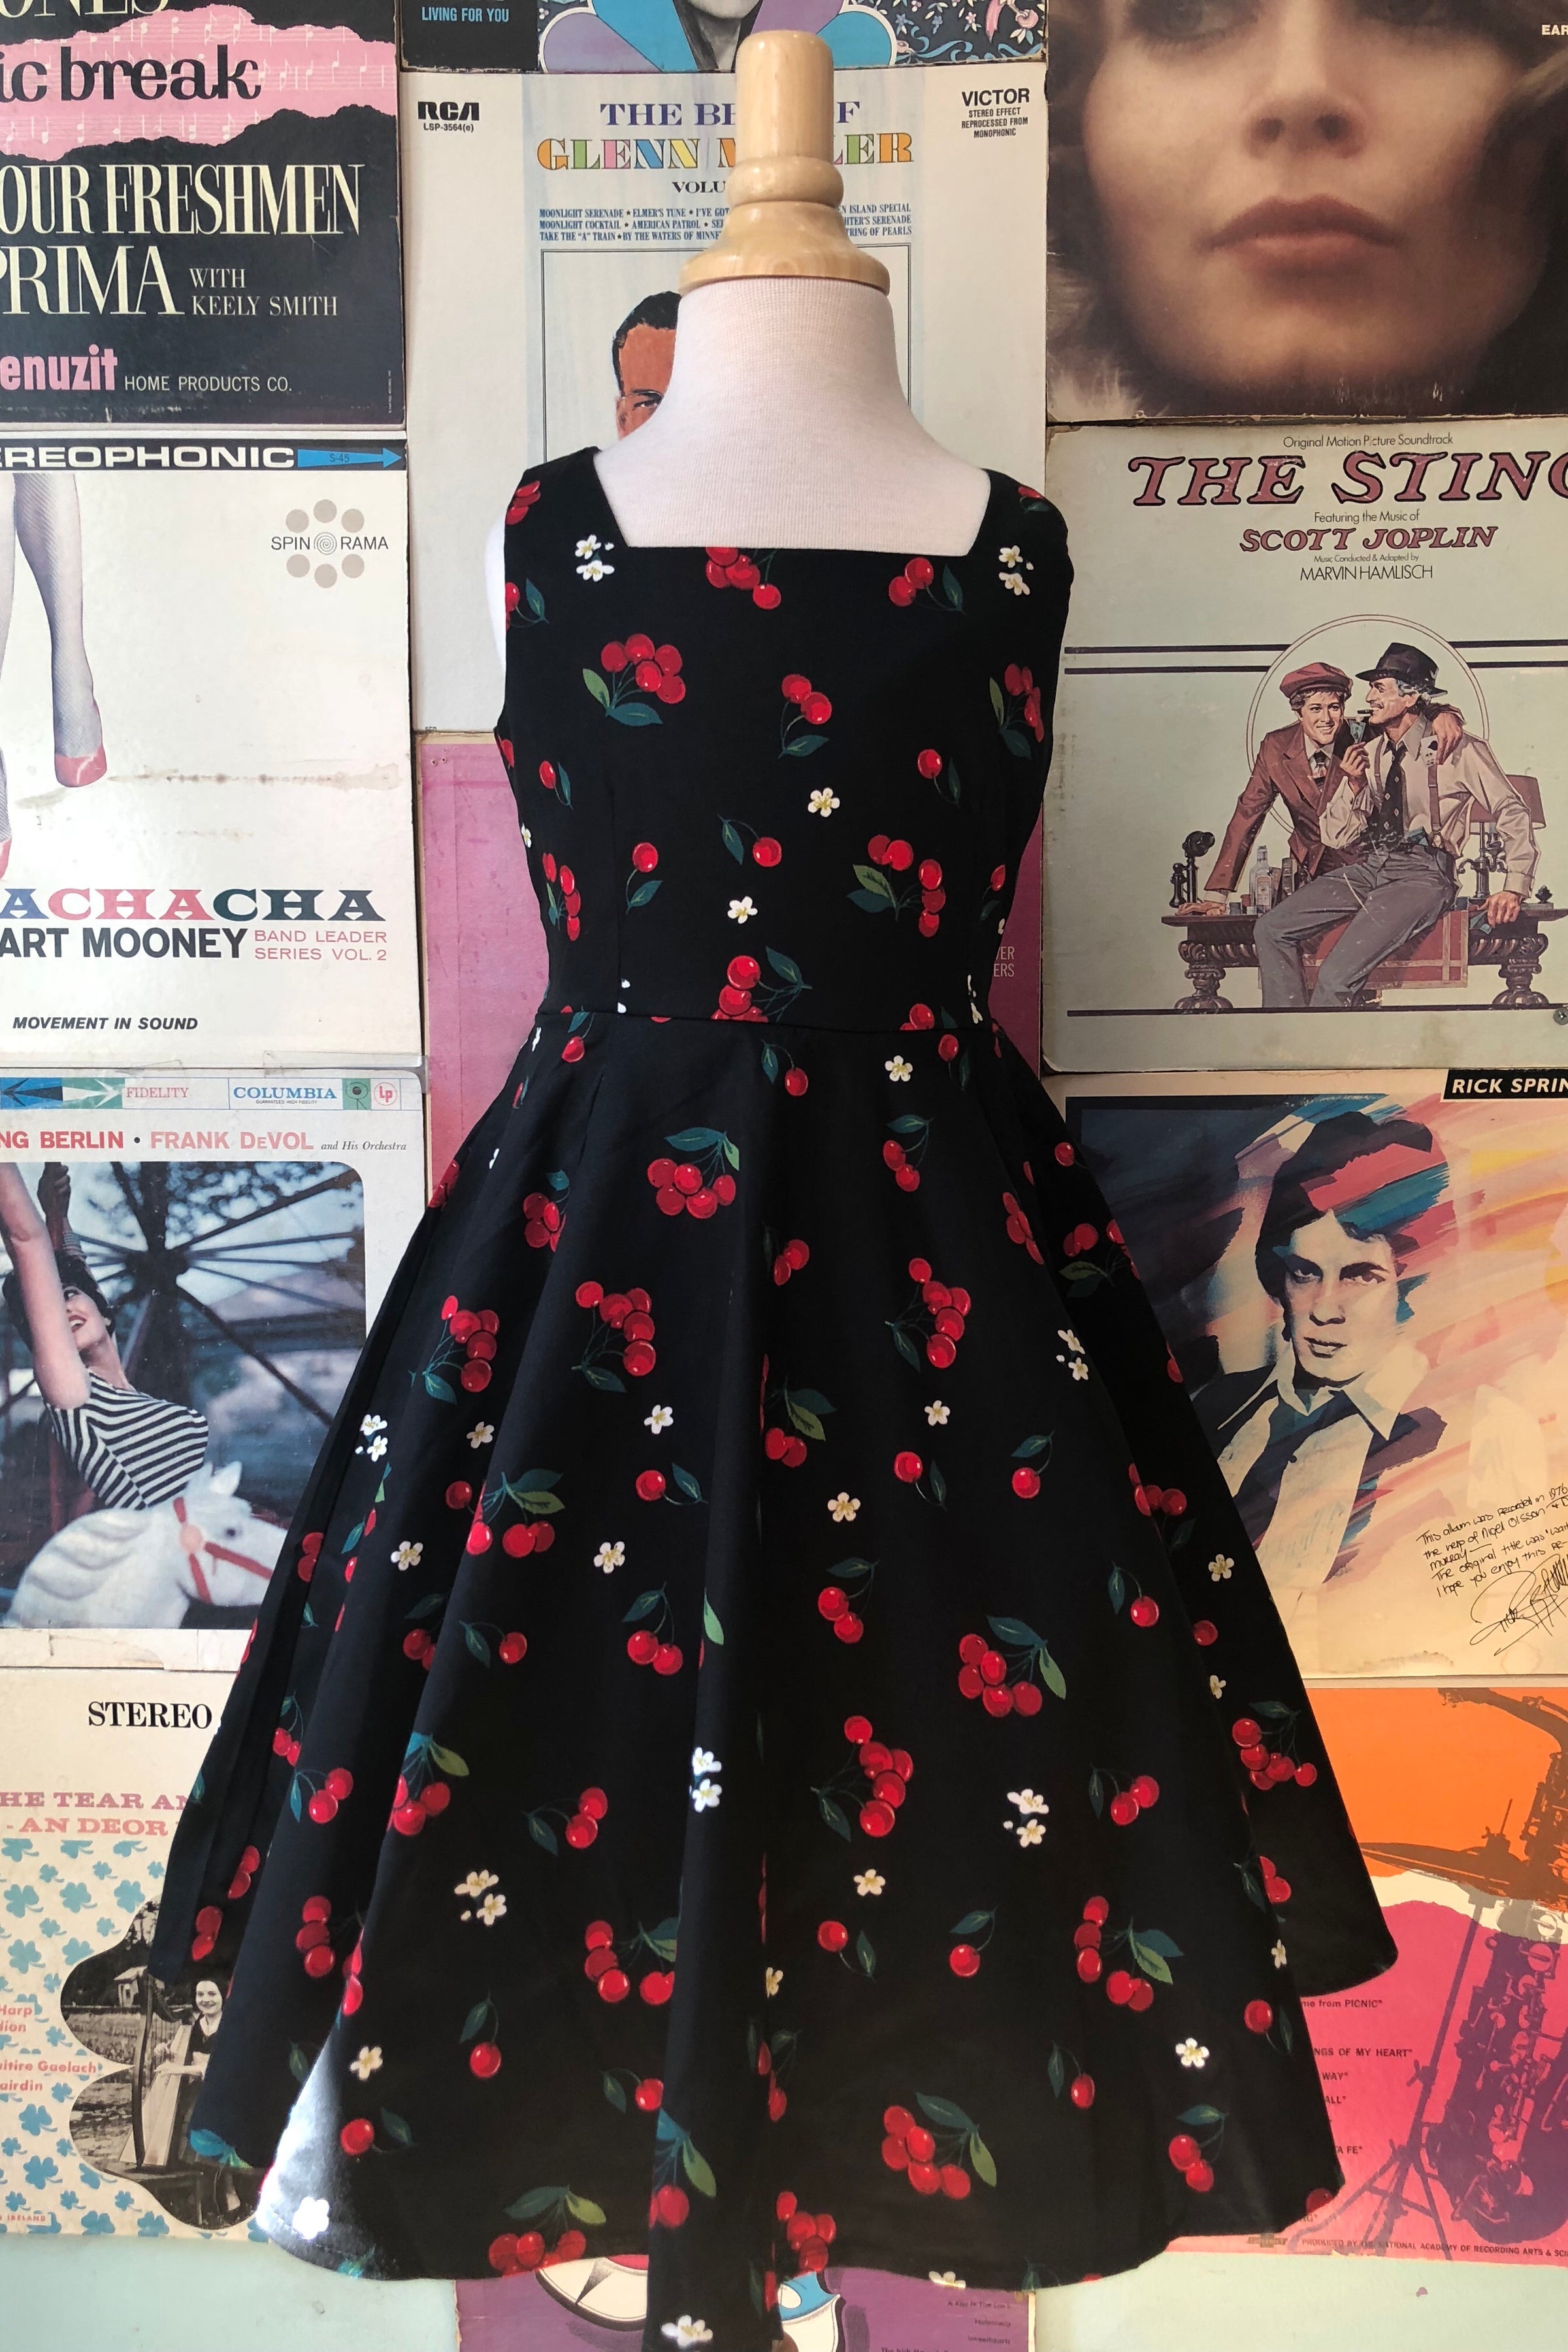 black dress with cherry print